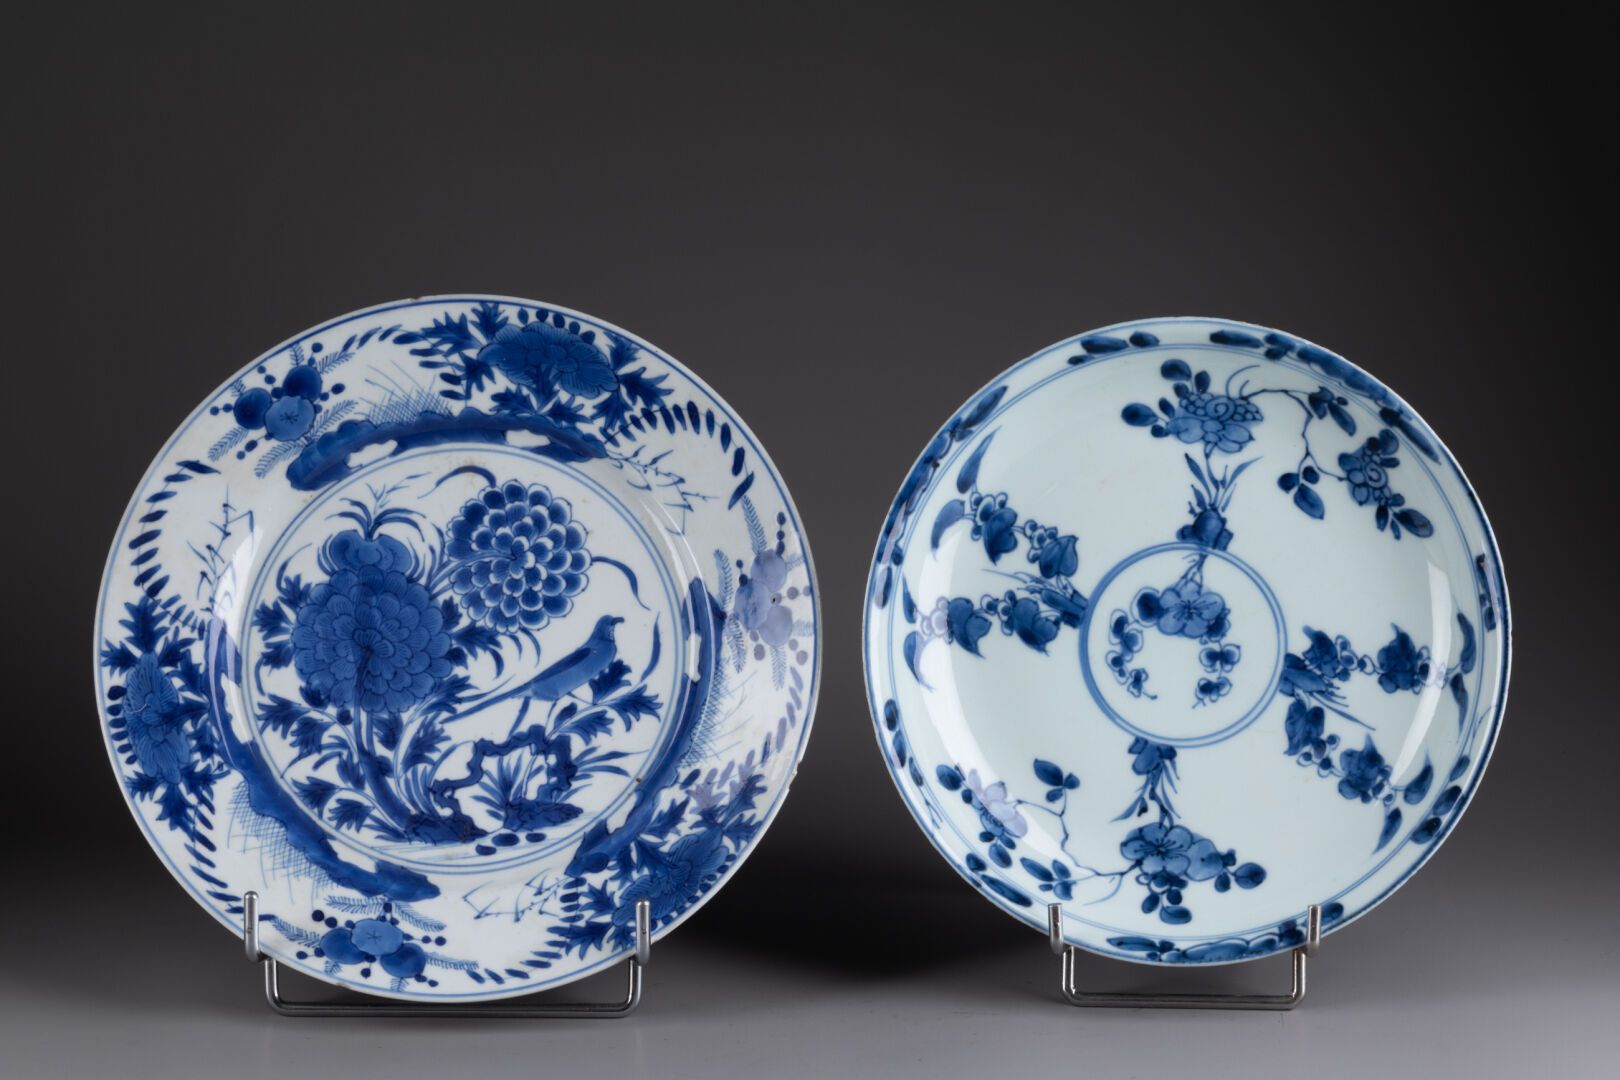 CHINE - XIXe siècle 一套两个带花饰的盘子 
瓷器和蓝色釉下彩 
D. 22和25.5厘米 
两个盘子里的薯片